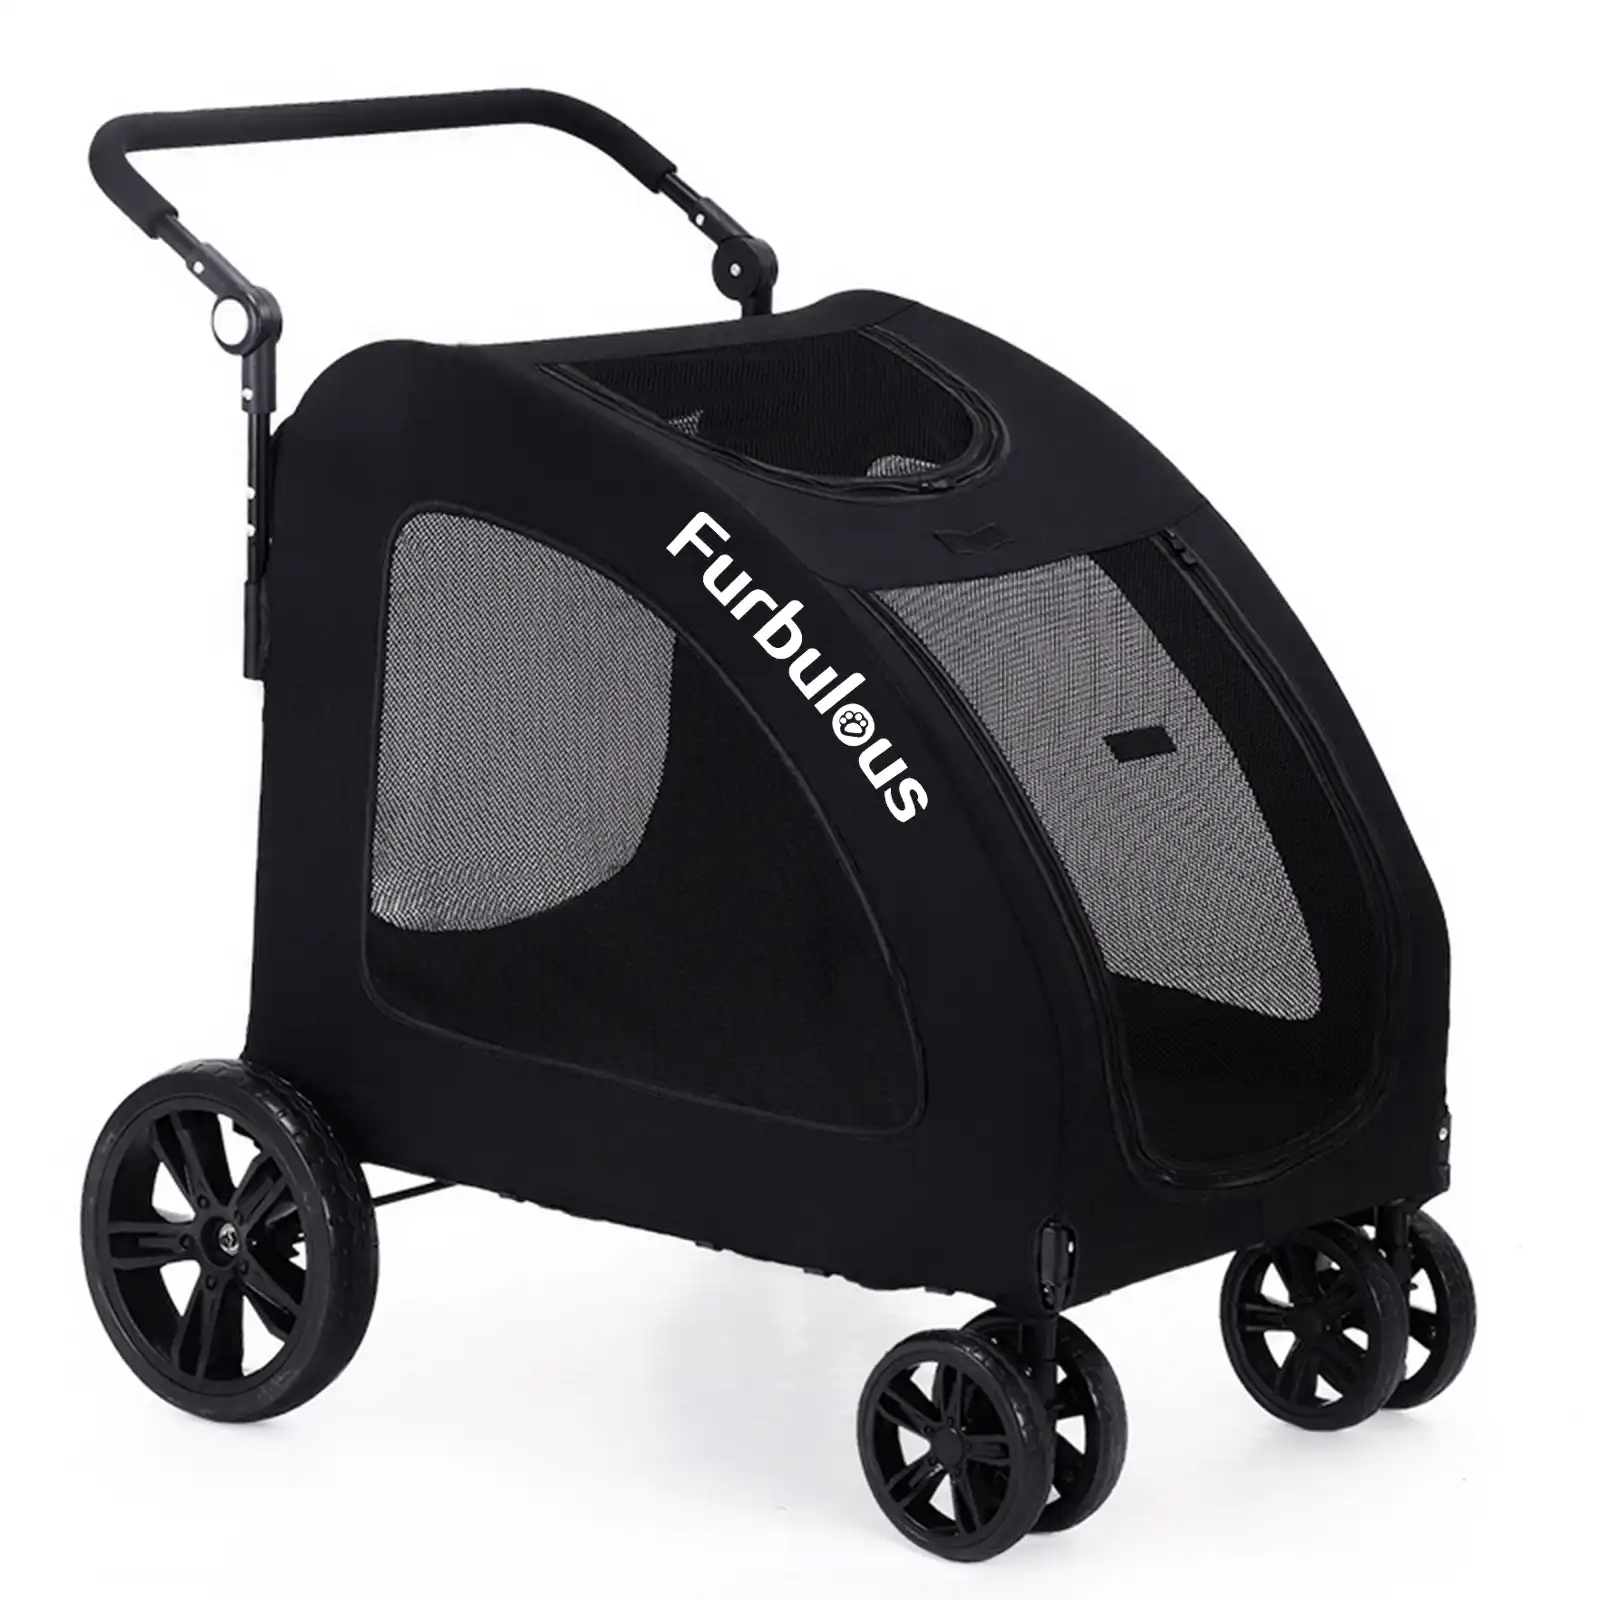 Furbulous Pet Dog Stroller Pram Carrier Cat Travel Foldable 4 Wheels 50kg Capacity - Black